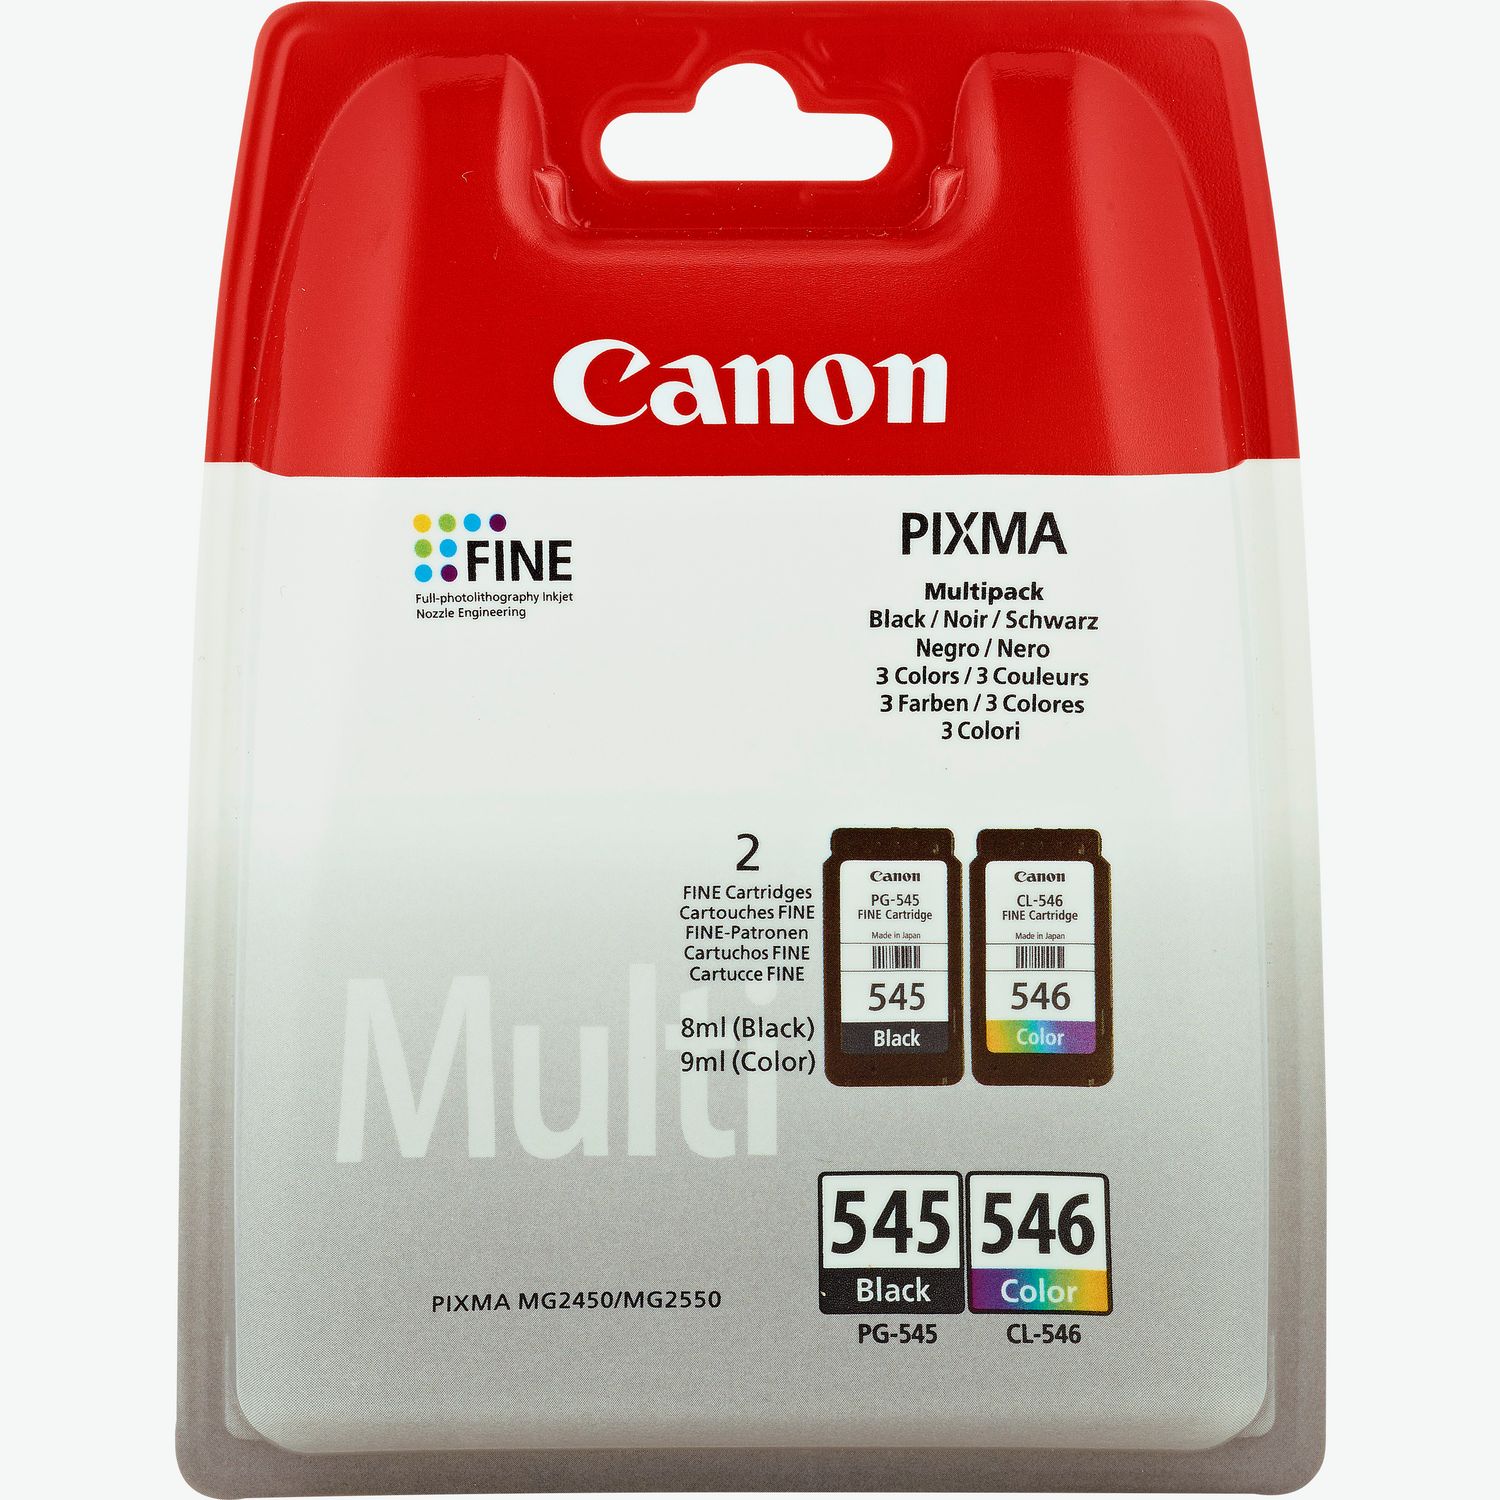 Canon PIXMA TS3350 Series desde 34,00 €